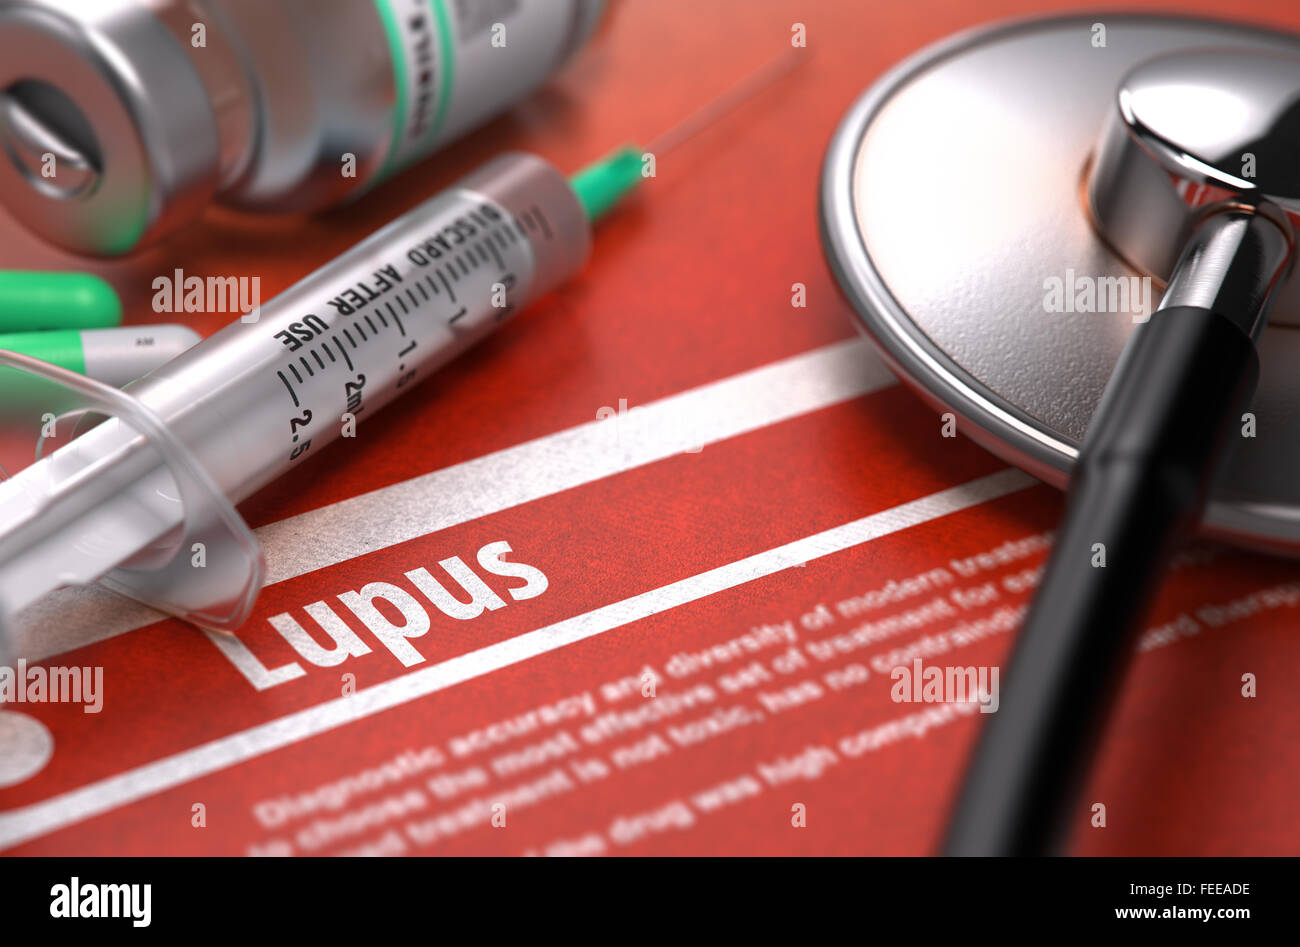 Diagnosis - Lupus. Medical Concept. Stock Photo